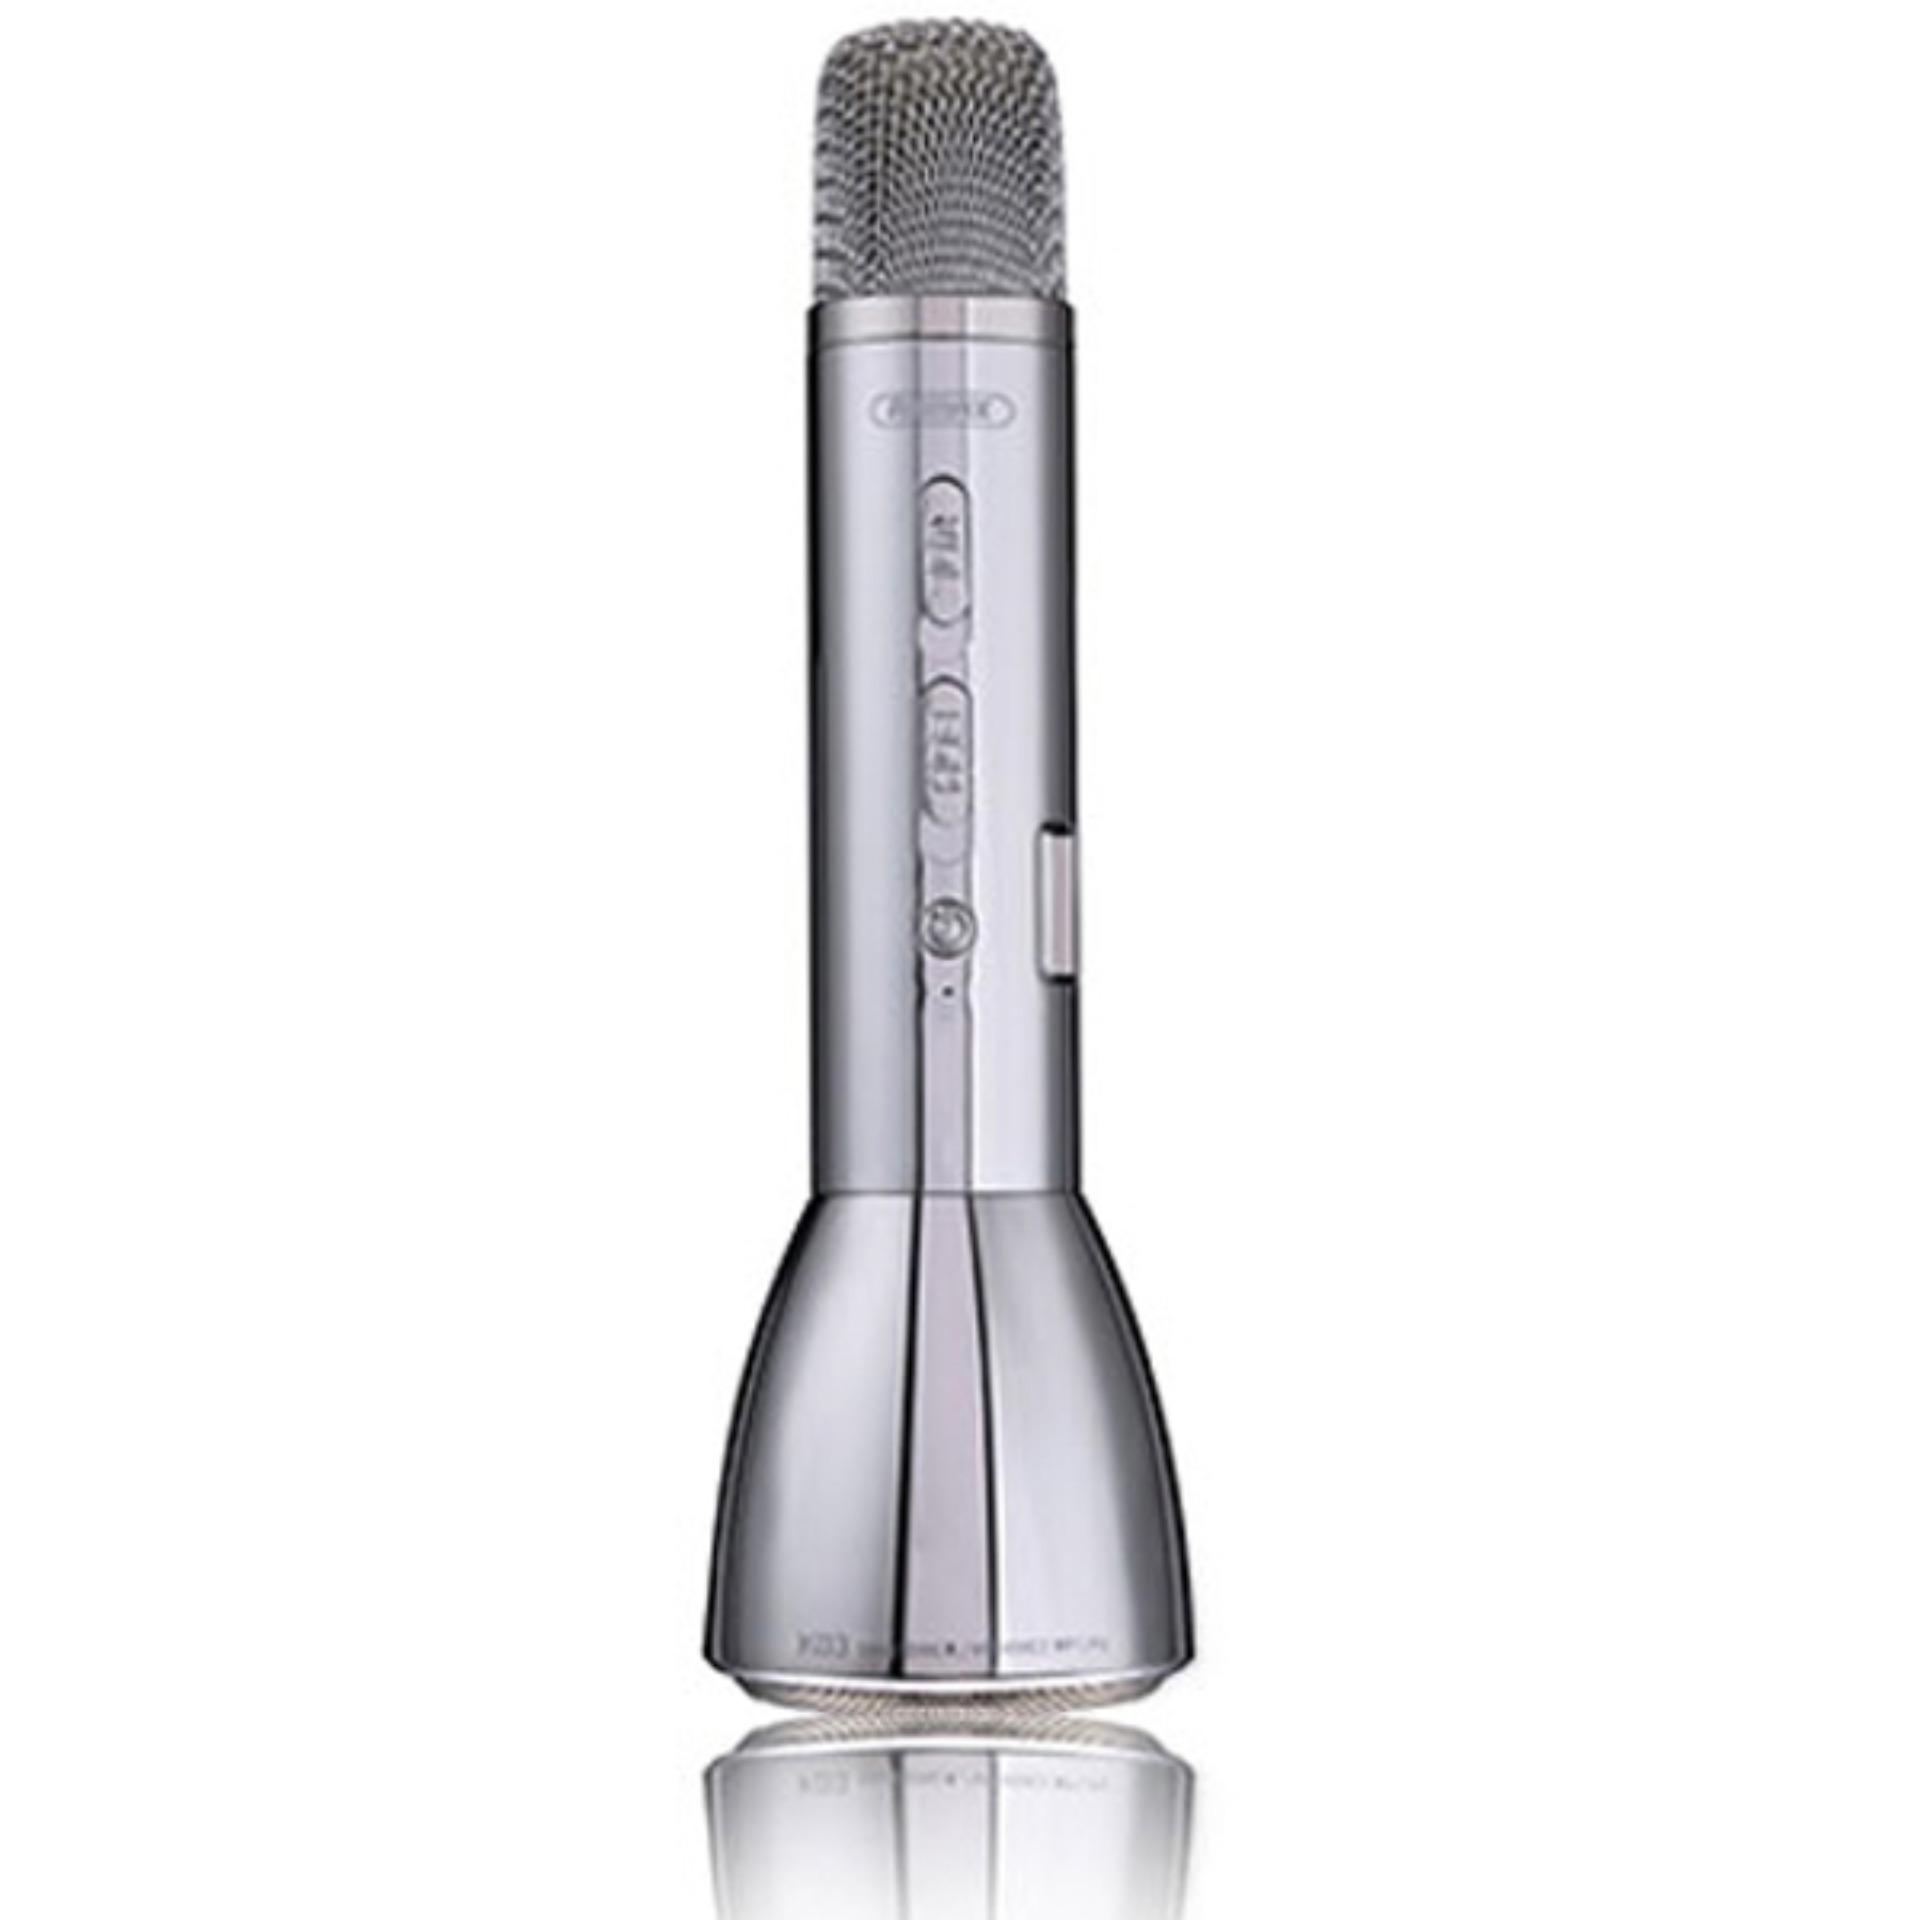 BELI Remax Karaoke Mikrofon Speaker Bluetooth - RMK-K03